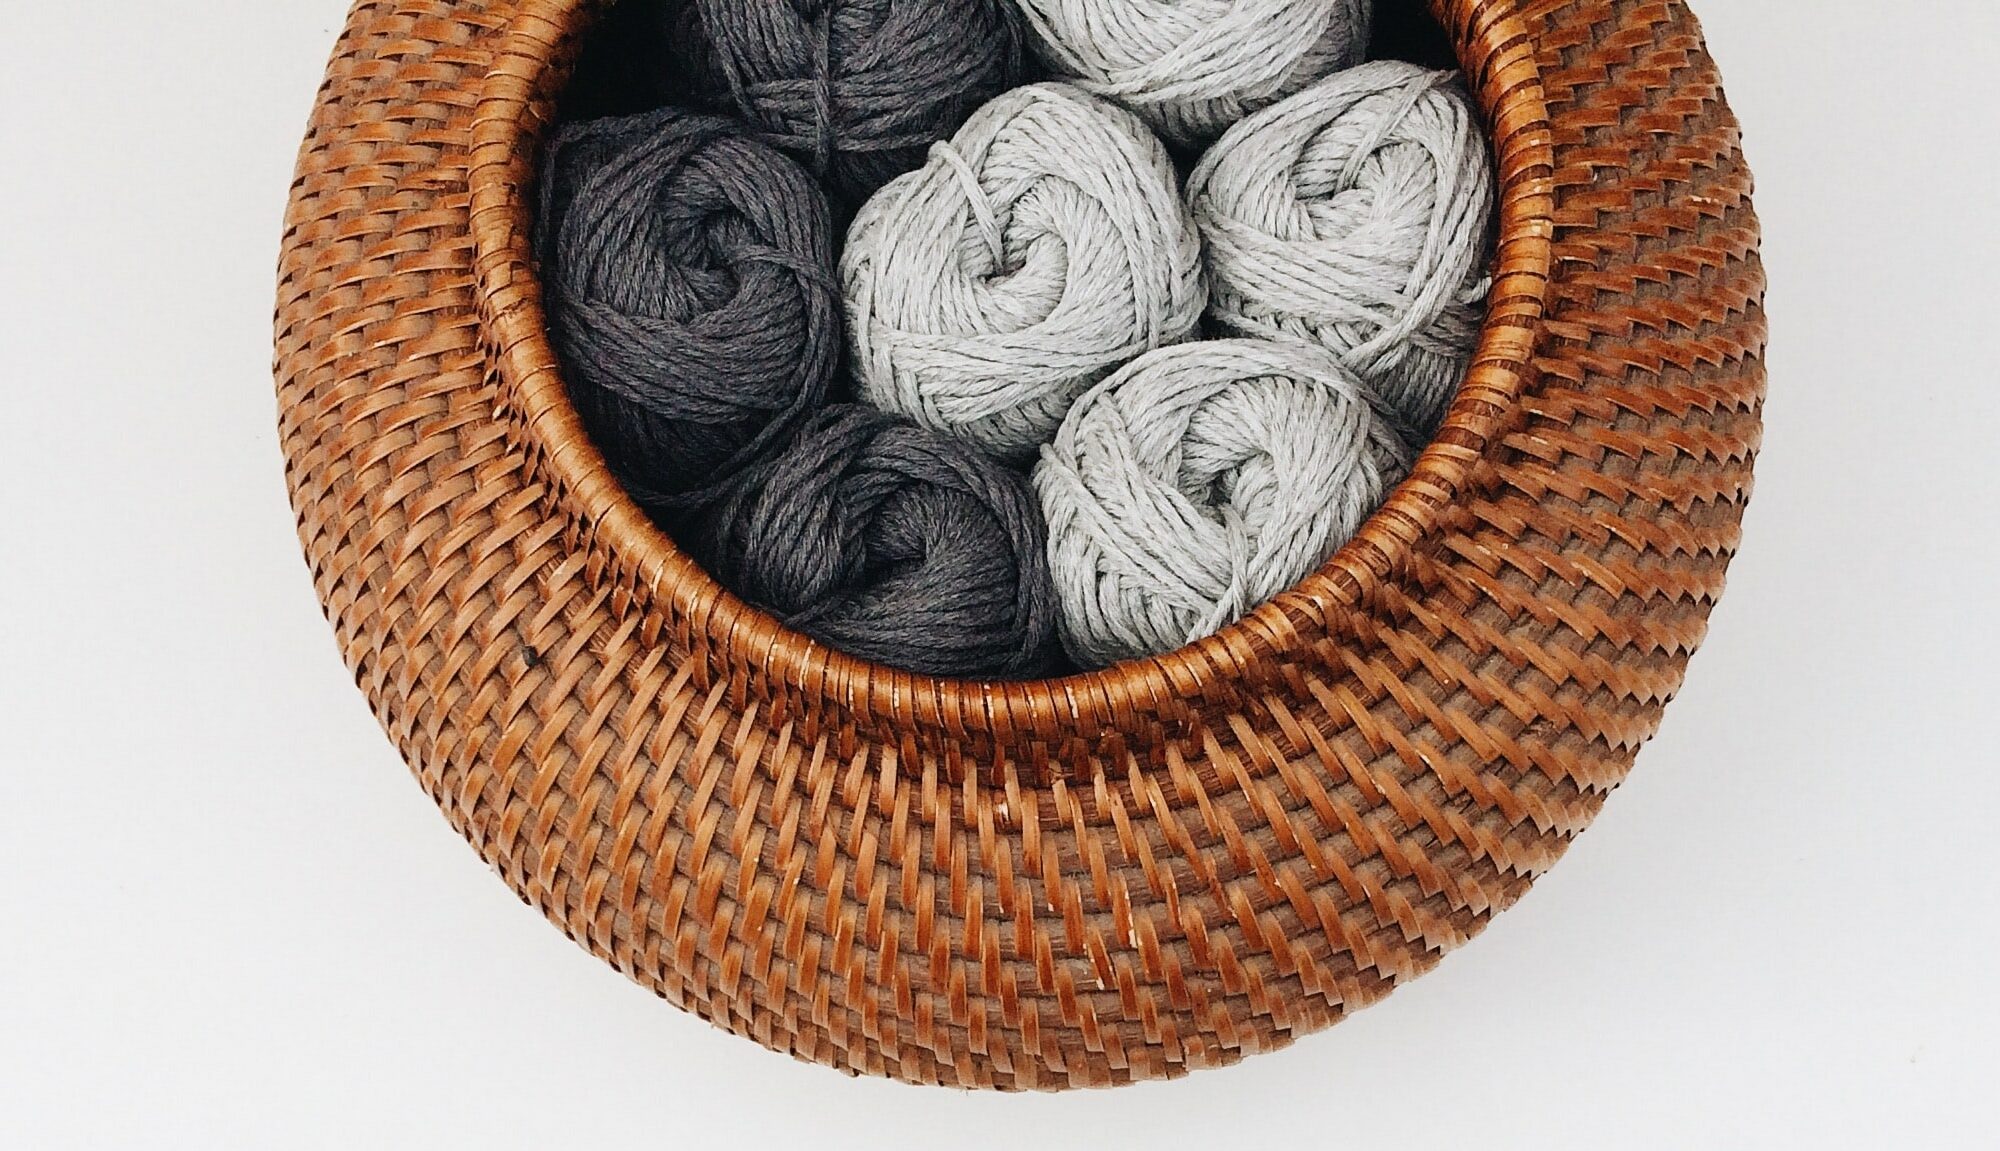 Basket of yarn image